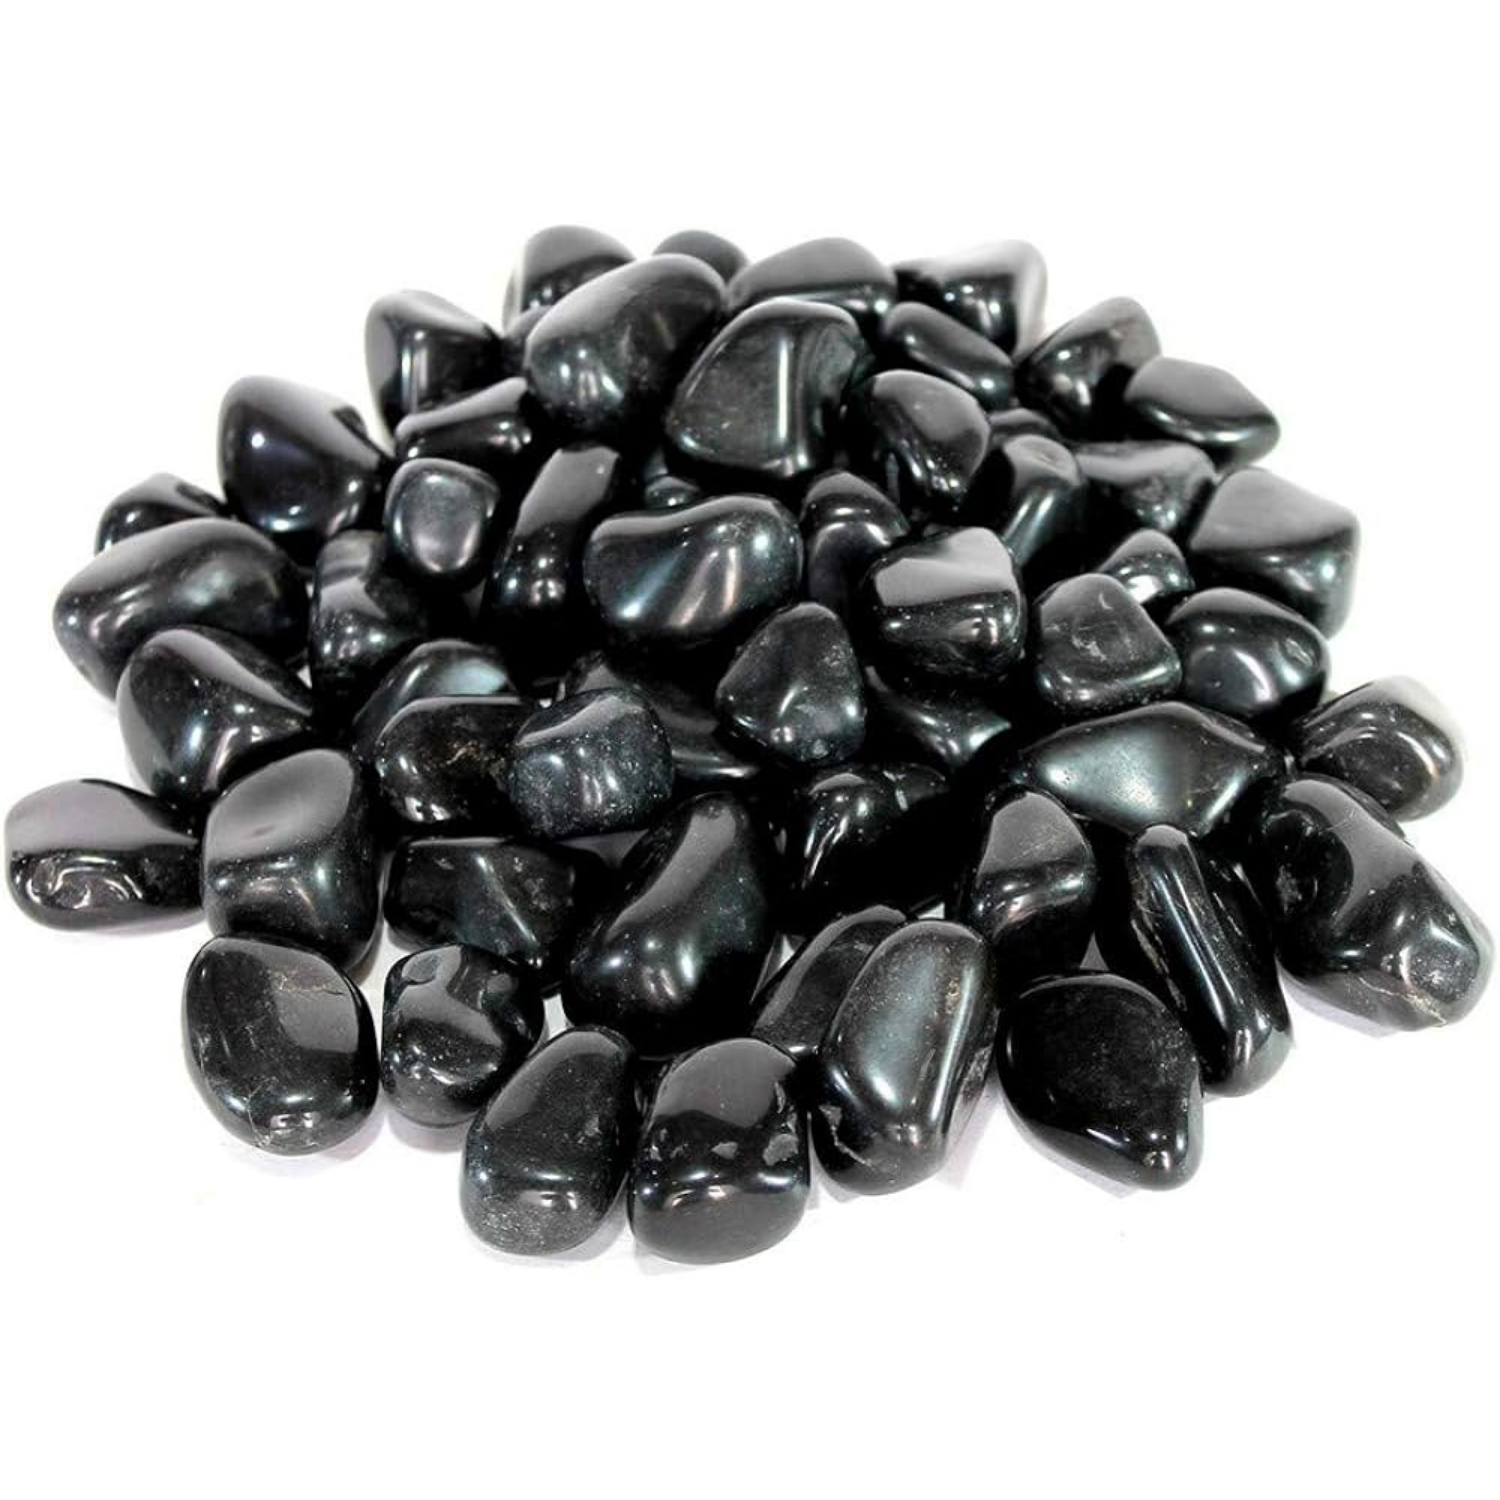 Black Polished Pebbles for Decoration |Garden|Table|Terrariums| Home Decor|Vase Fillers